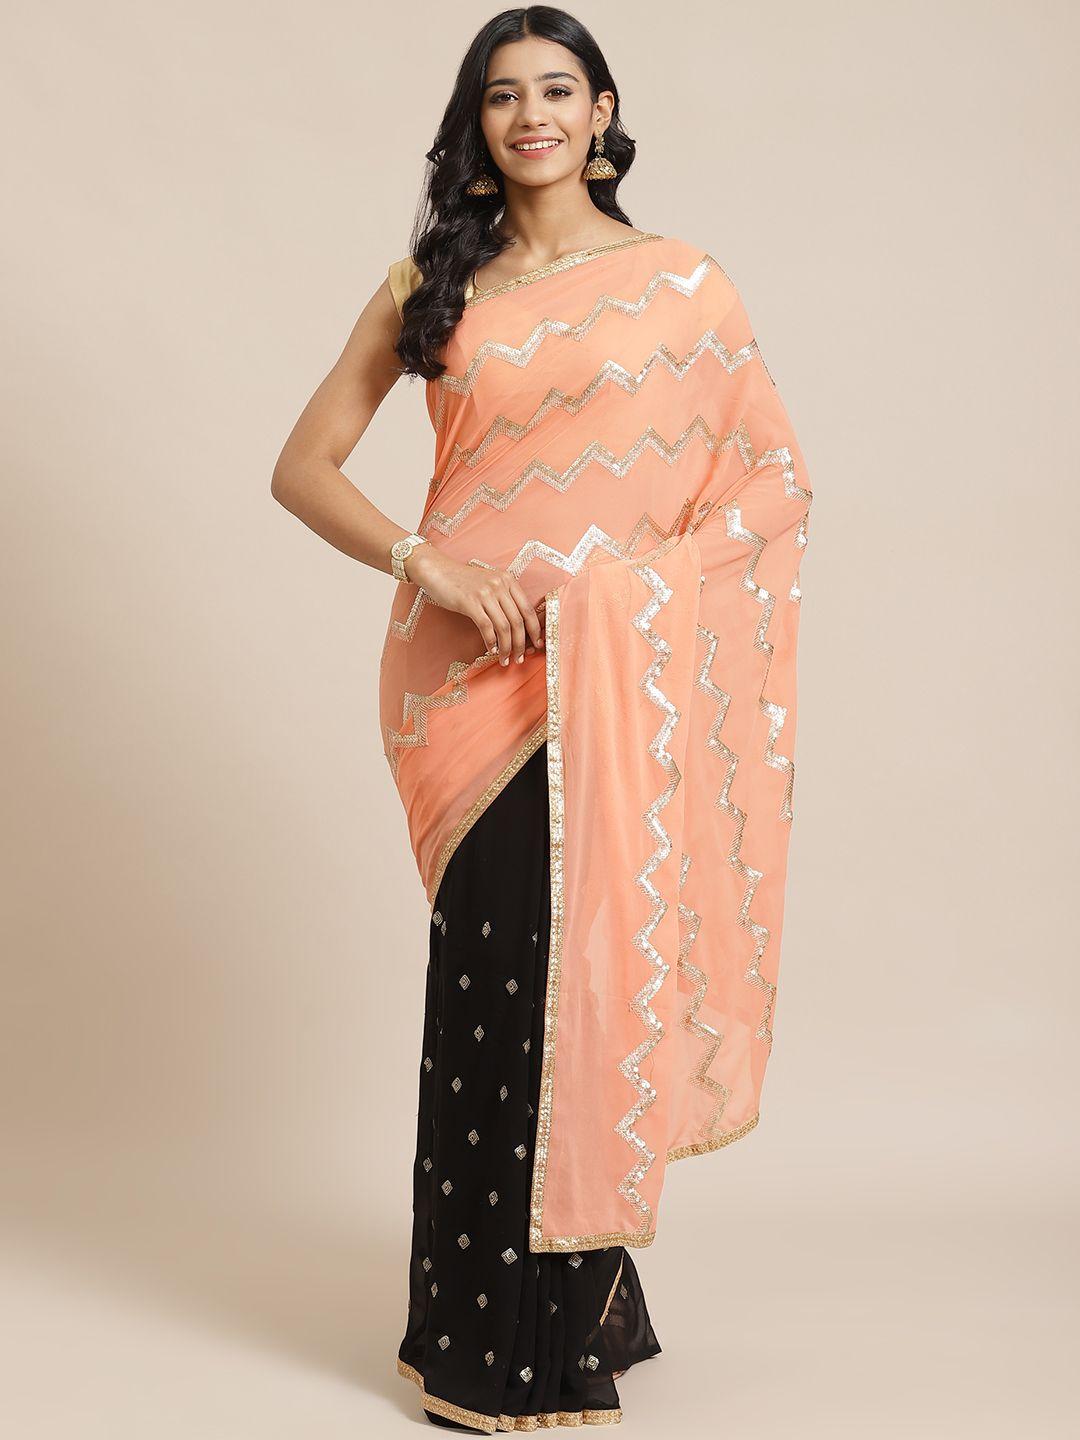 redround peach-coloured & black half-&-half embellished saree